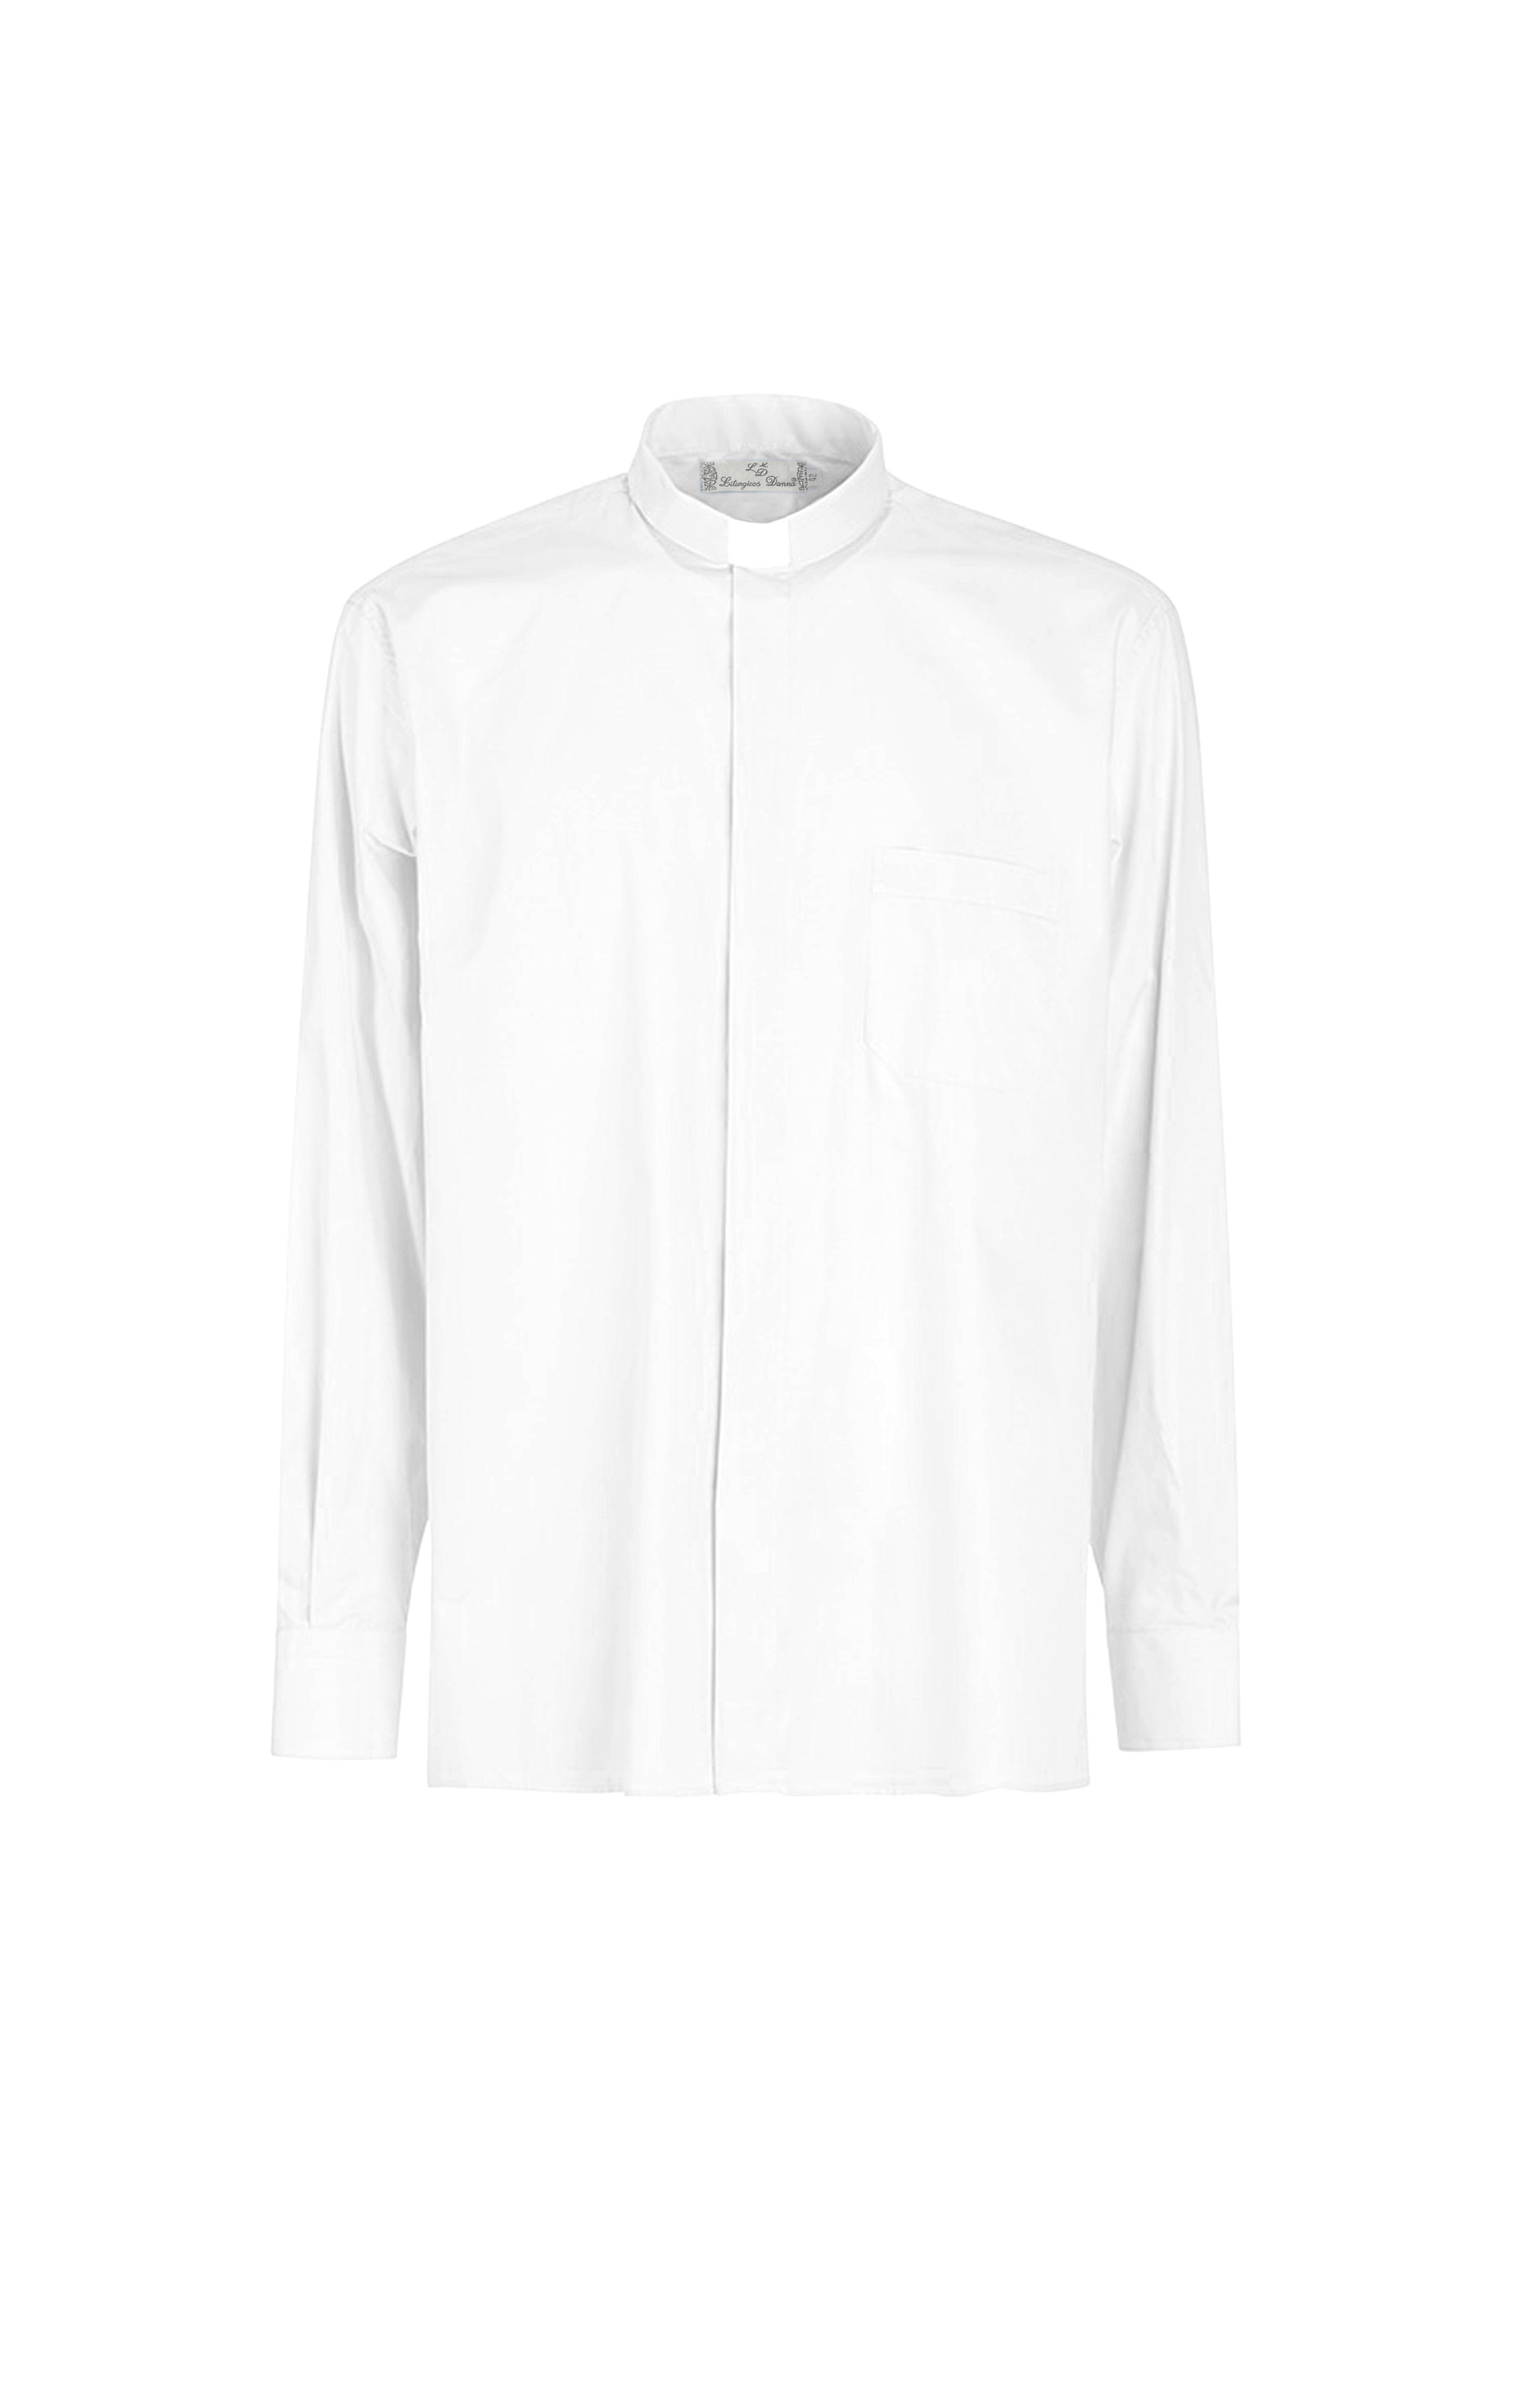 Priests & Clergy Shirts - Short & Long sleeve / Camisas de Sacerdote Manga Corta y Larga - Cuello clergyman